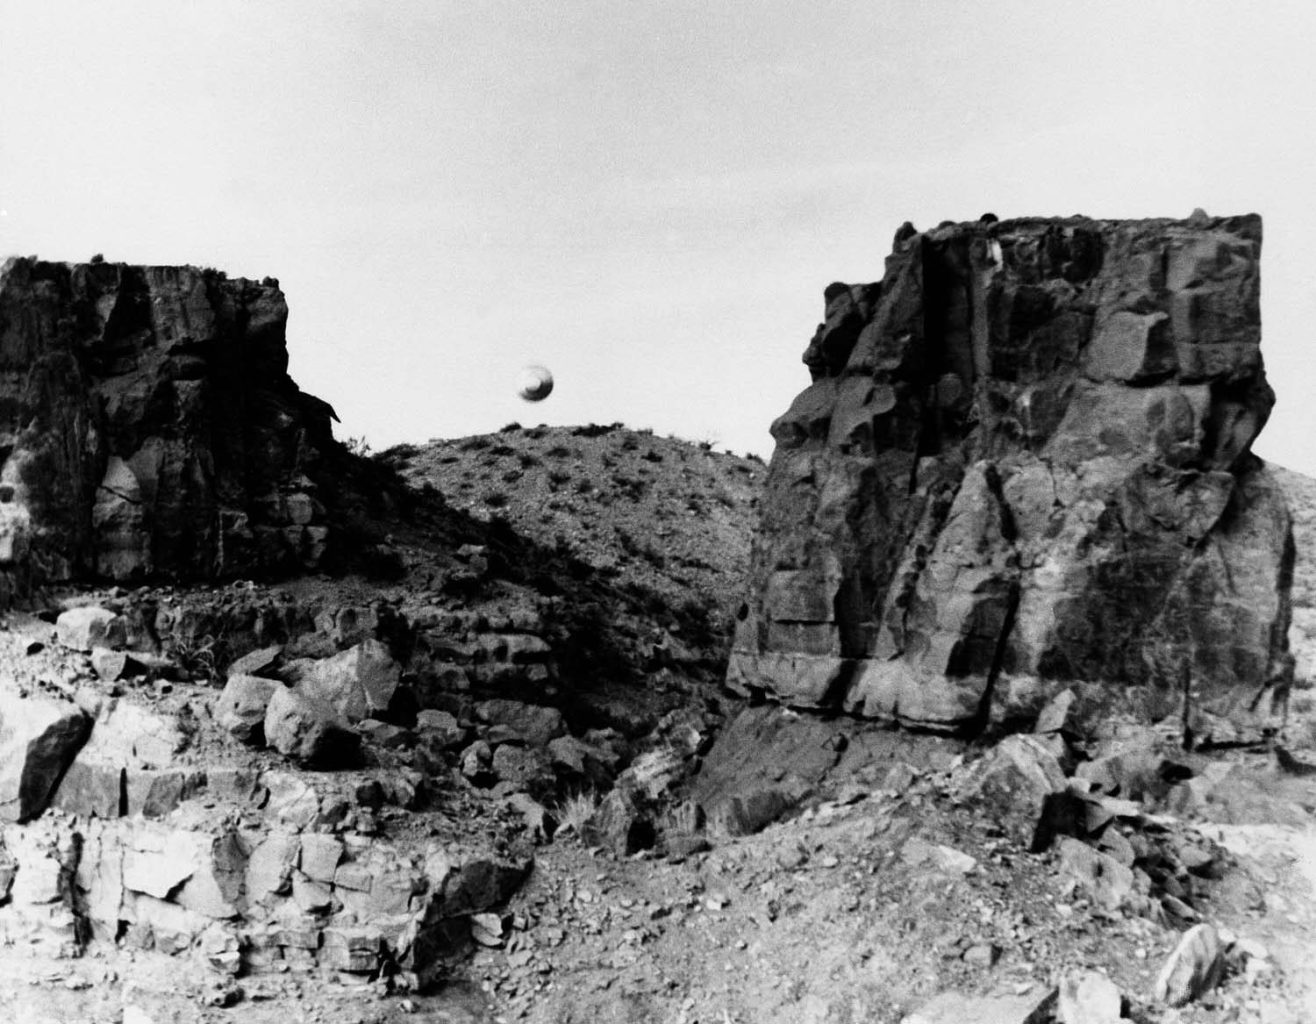 UFO hovering over rocky landscape